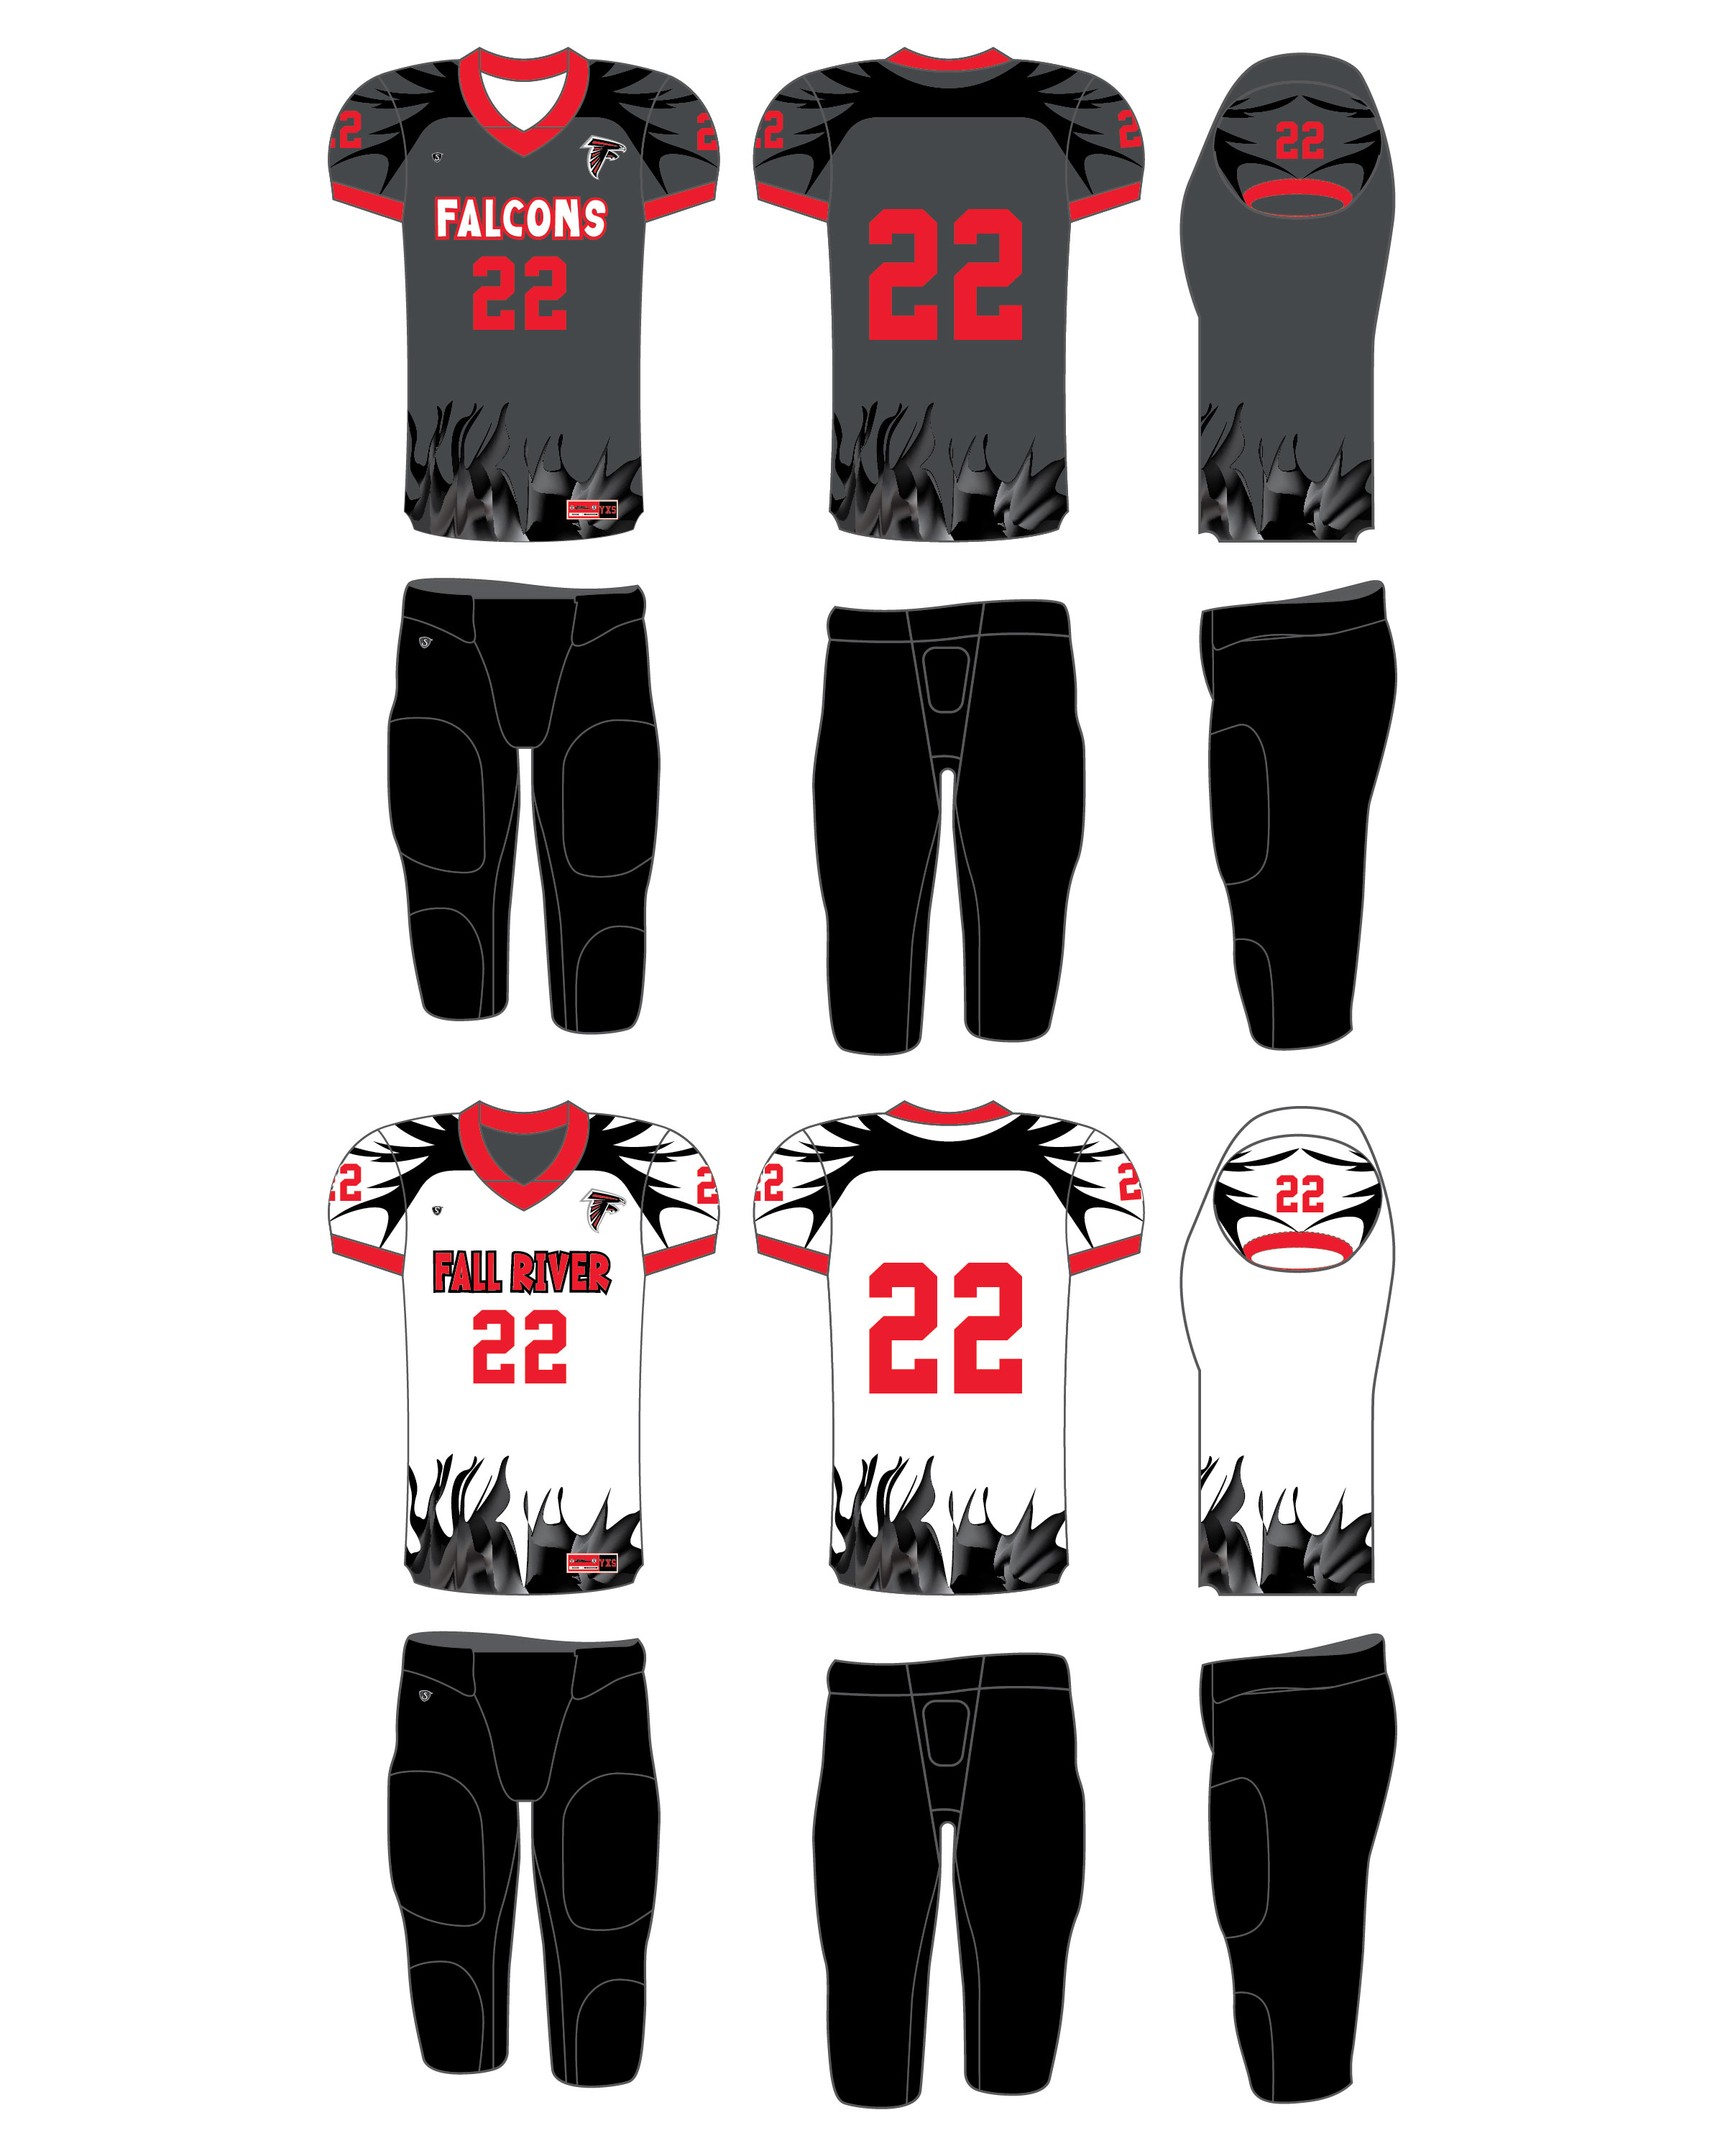 Custom Sublimated Football Uniform - Fall River 1 